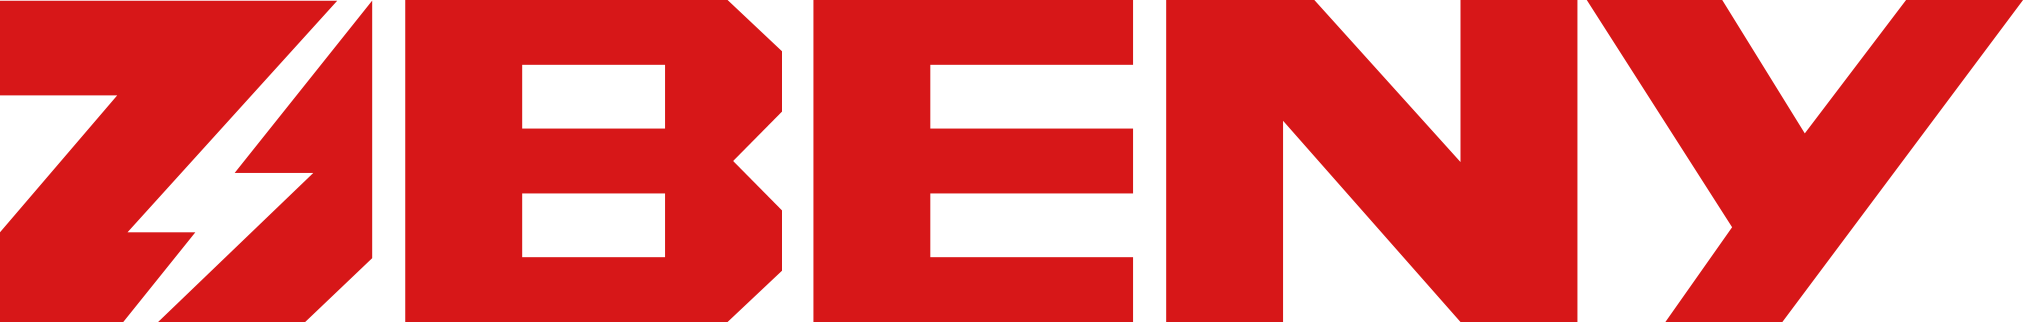 BENY Electric logo.